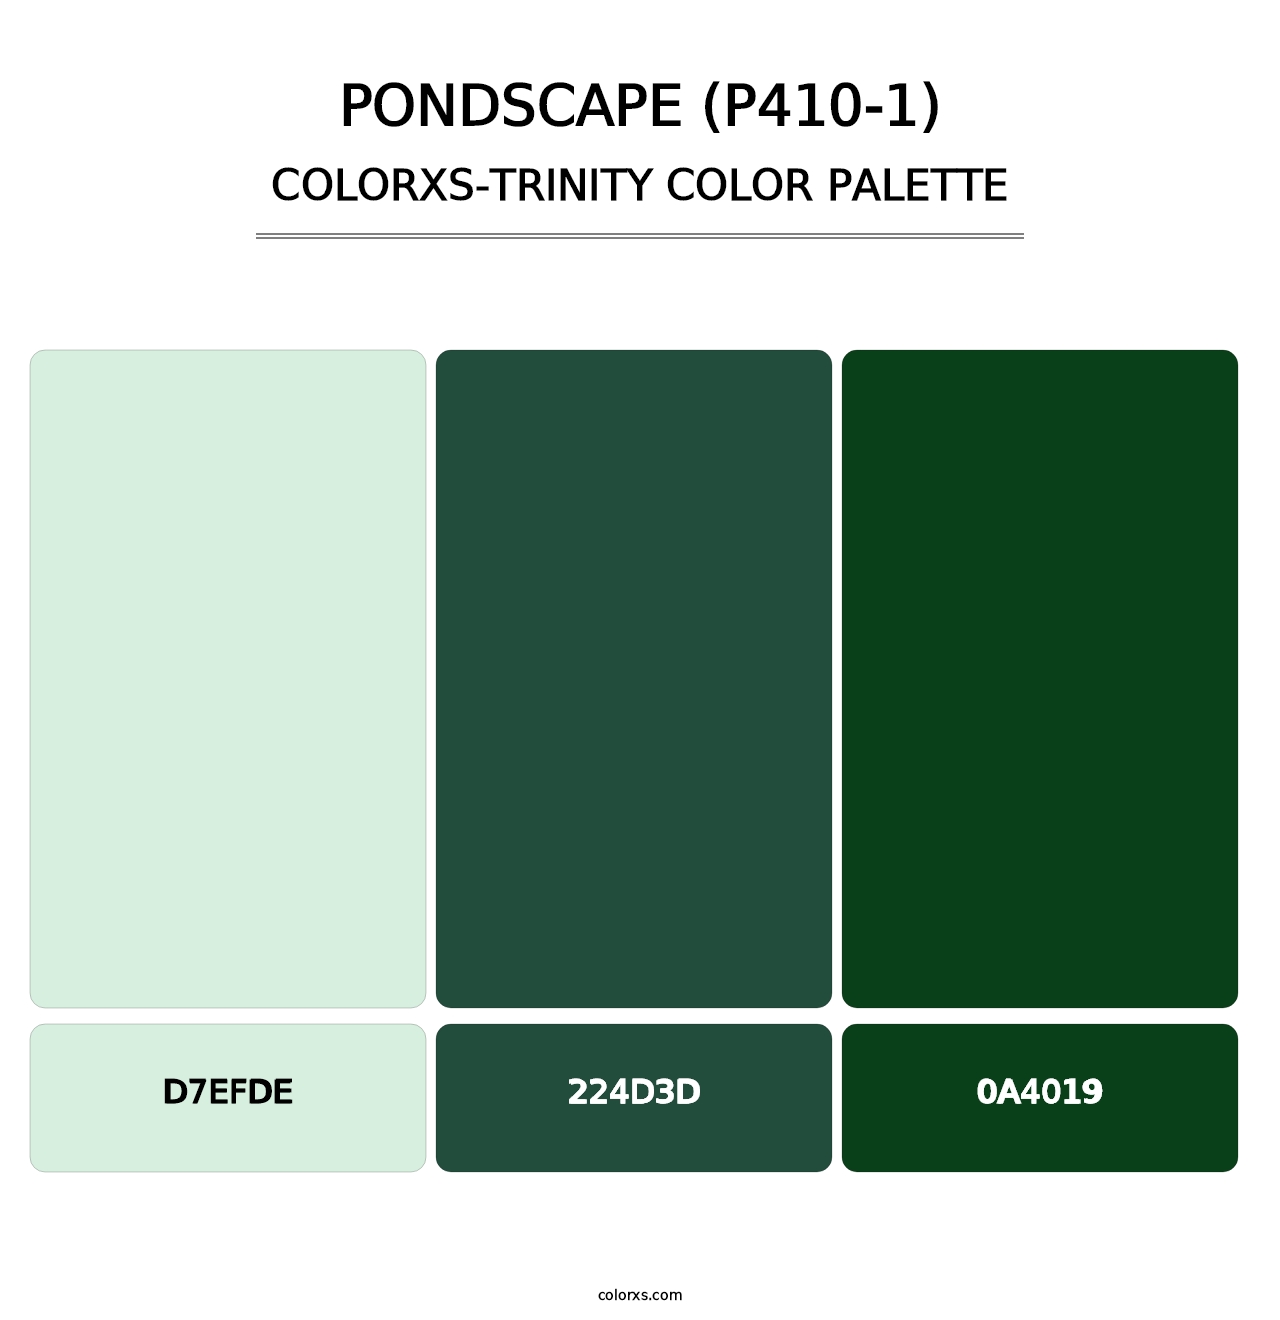 Pondscape (P410-1) - Colorxs Trinity Palette